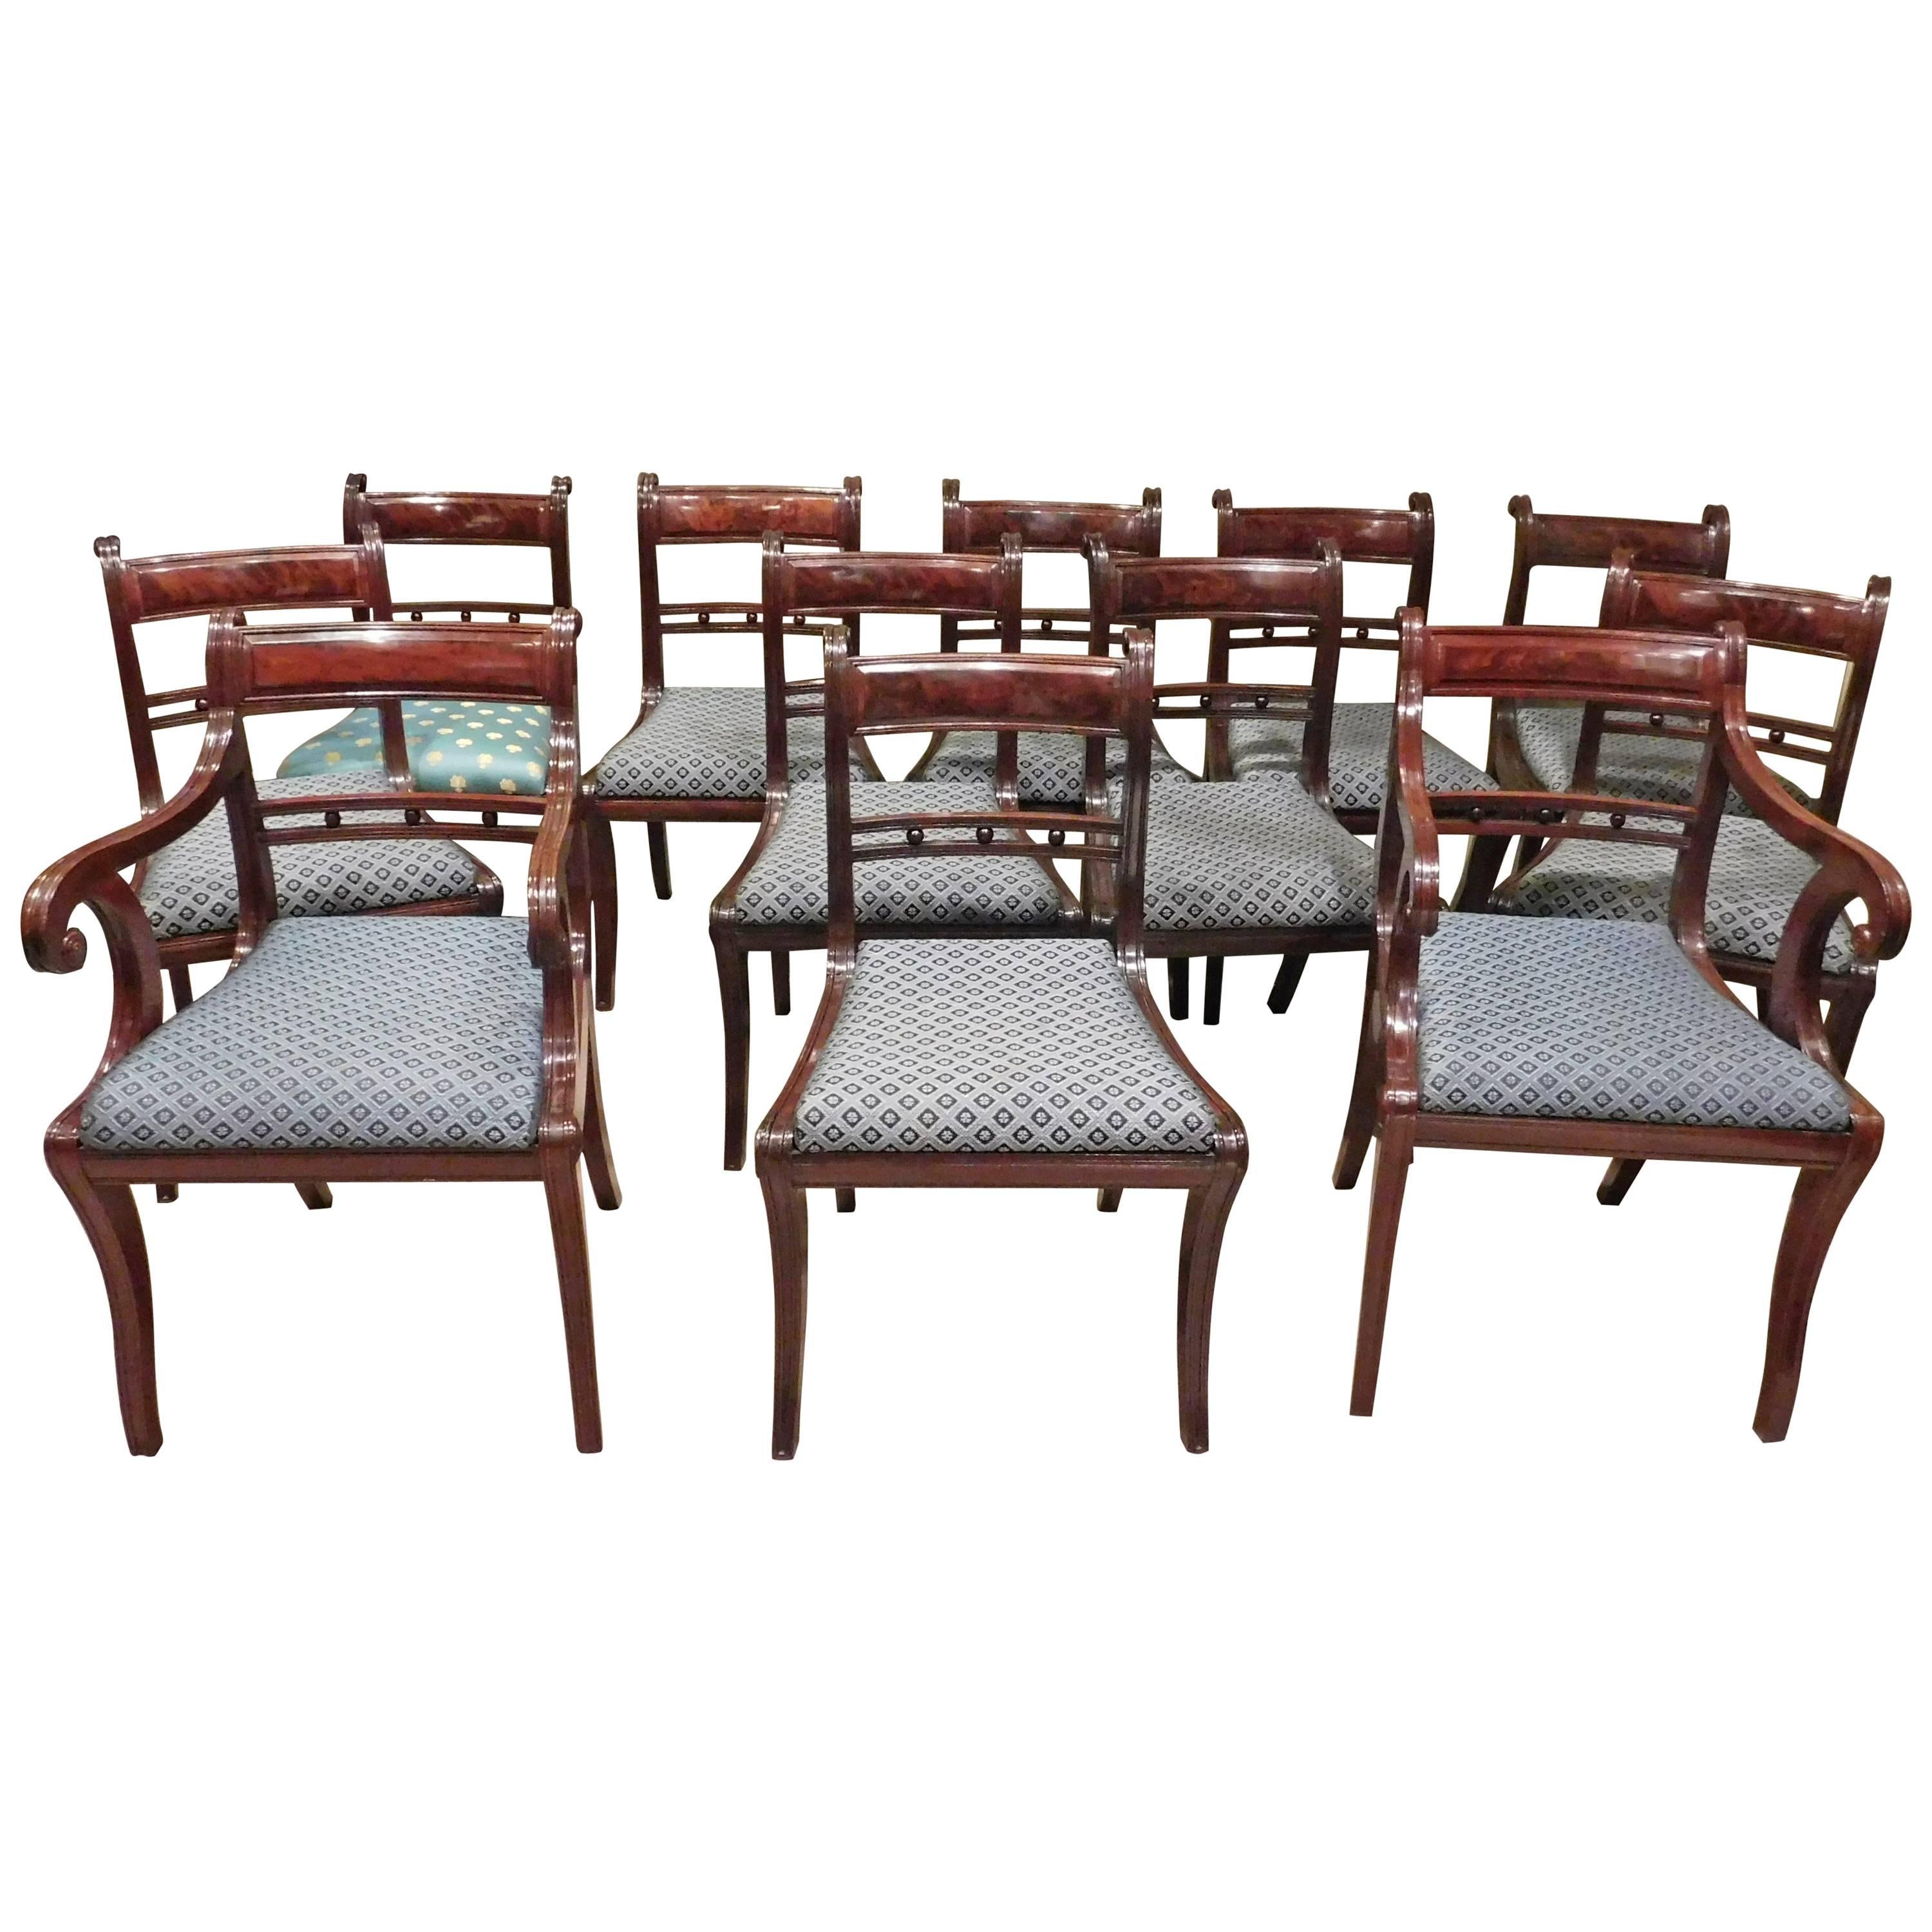 Set of 12 Classical Klismos Dining Chairs, circa 1815, Probably Philadelphia